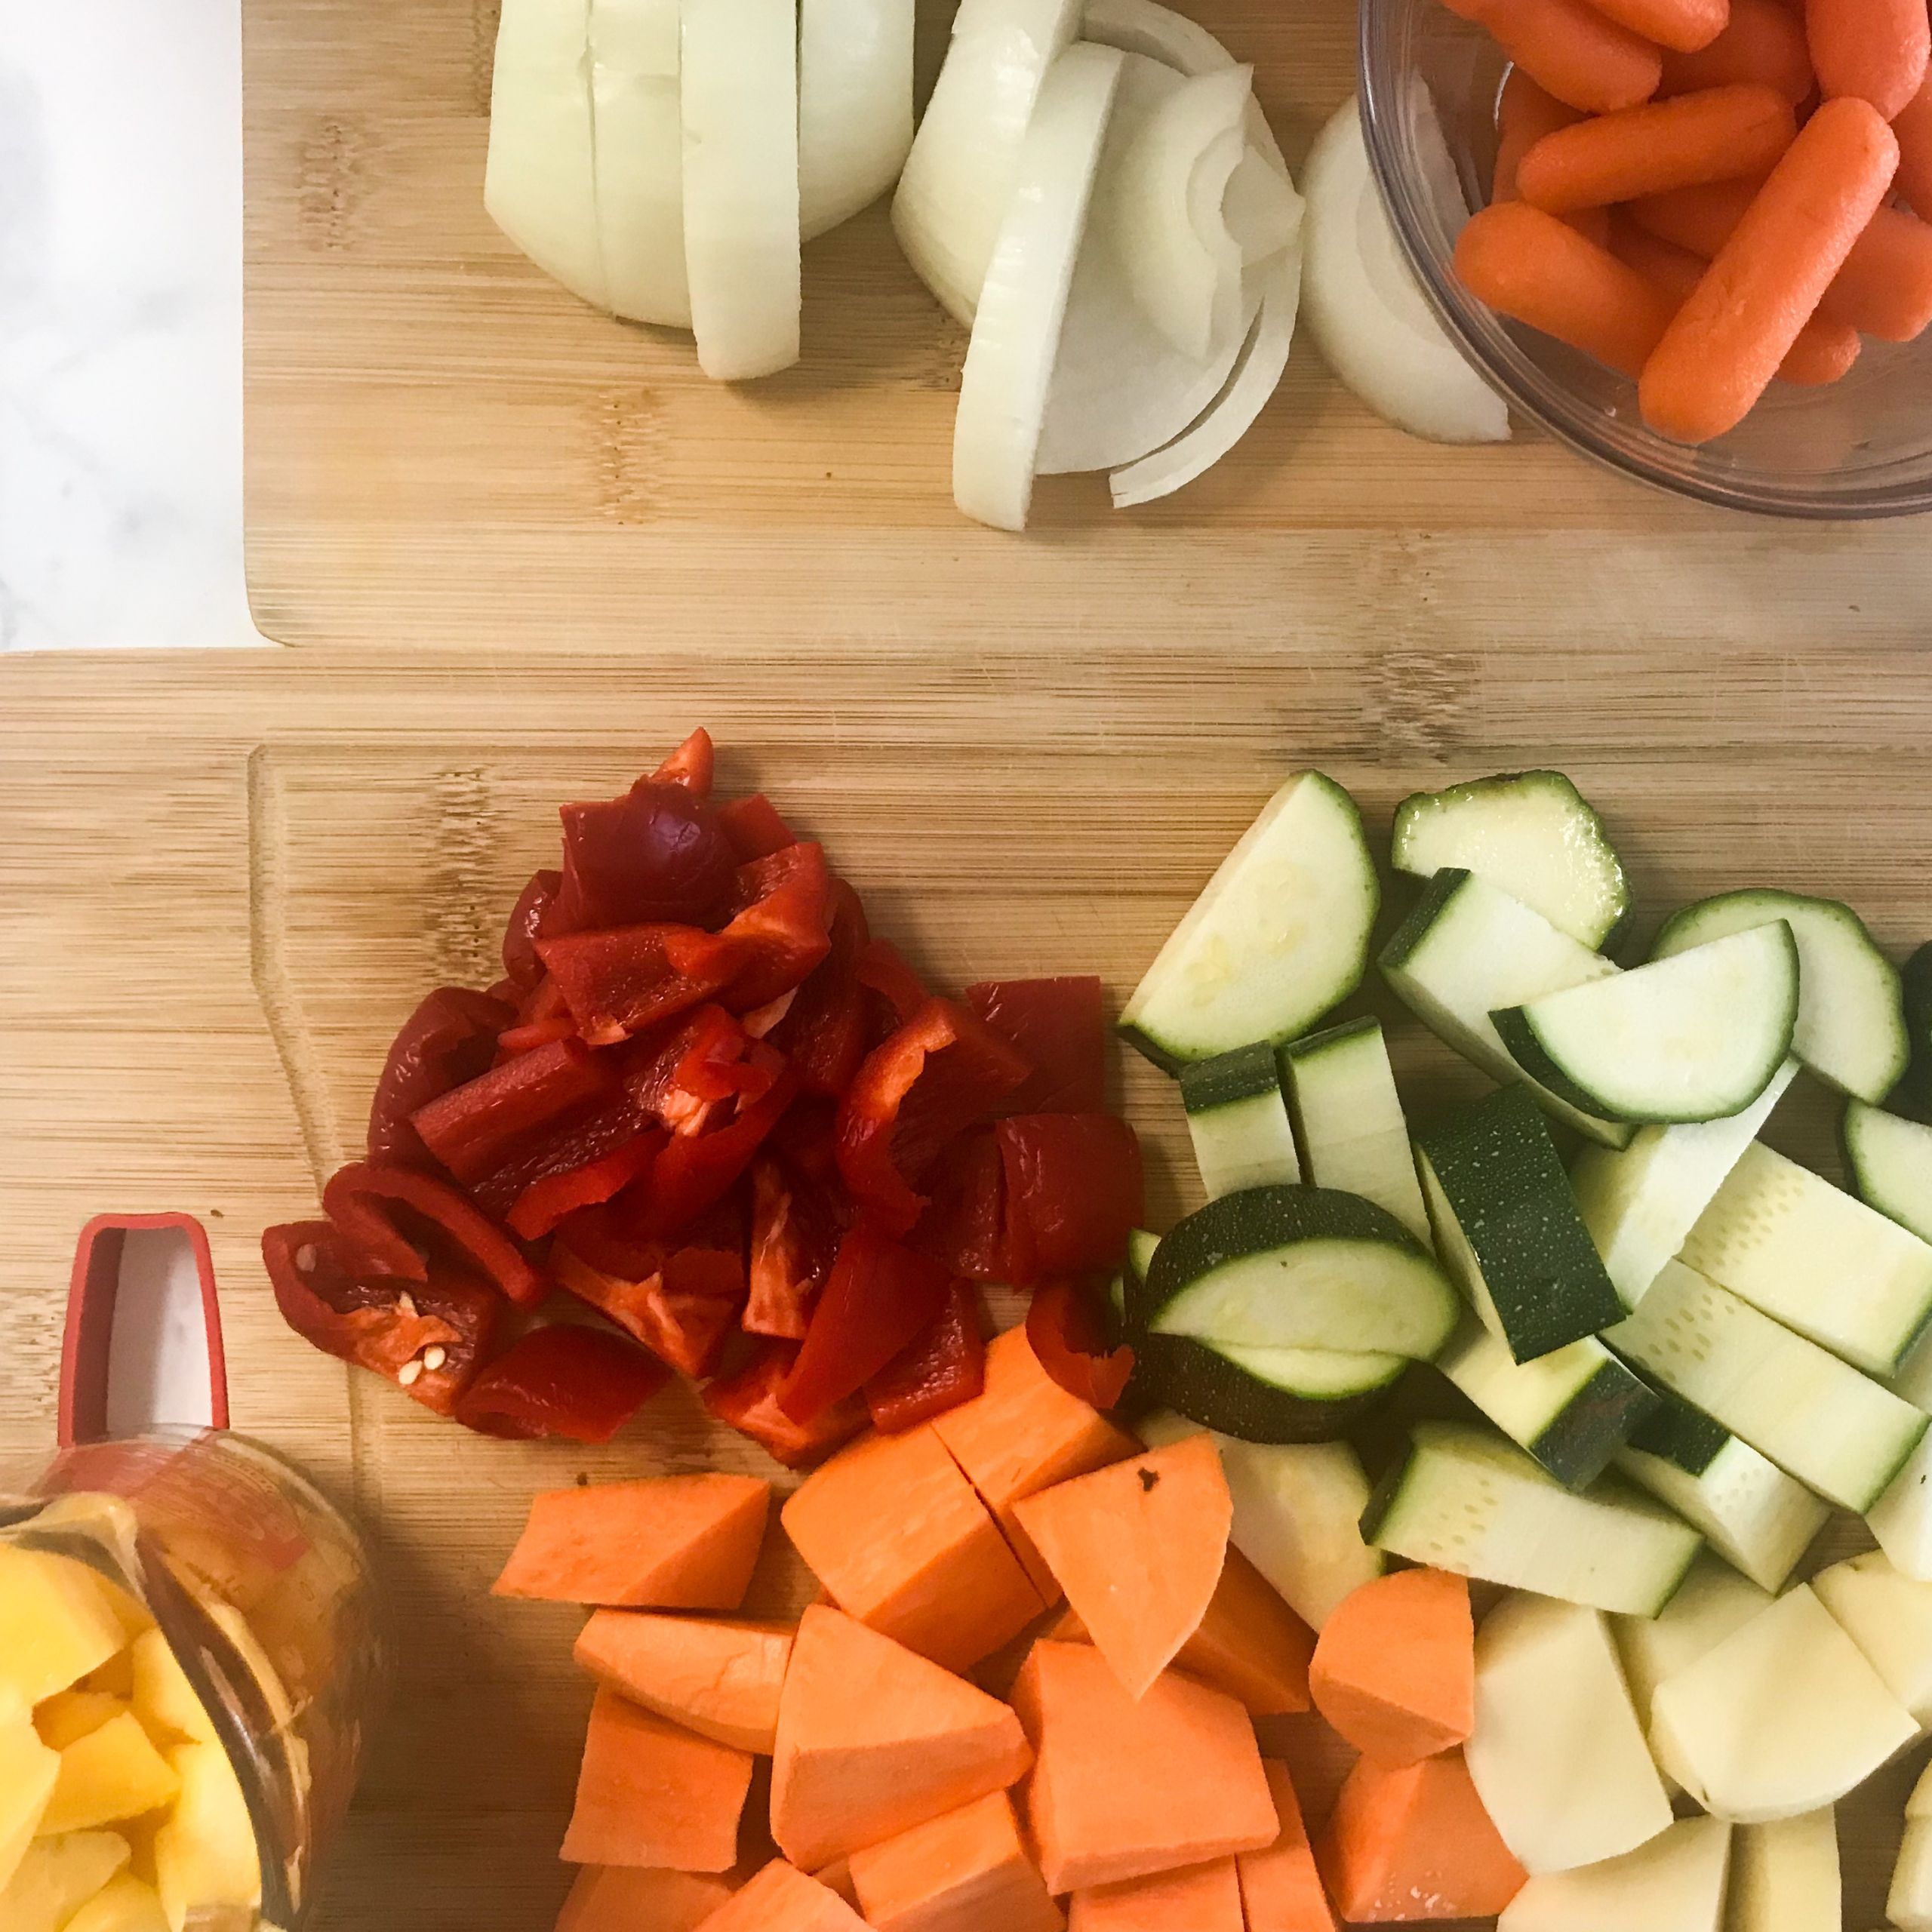 cut up veggies on a cutting board